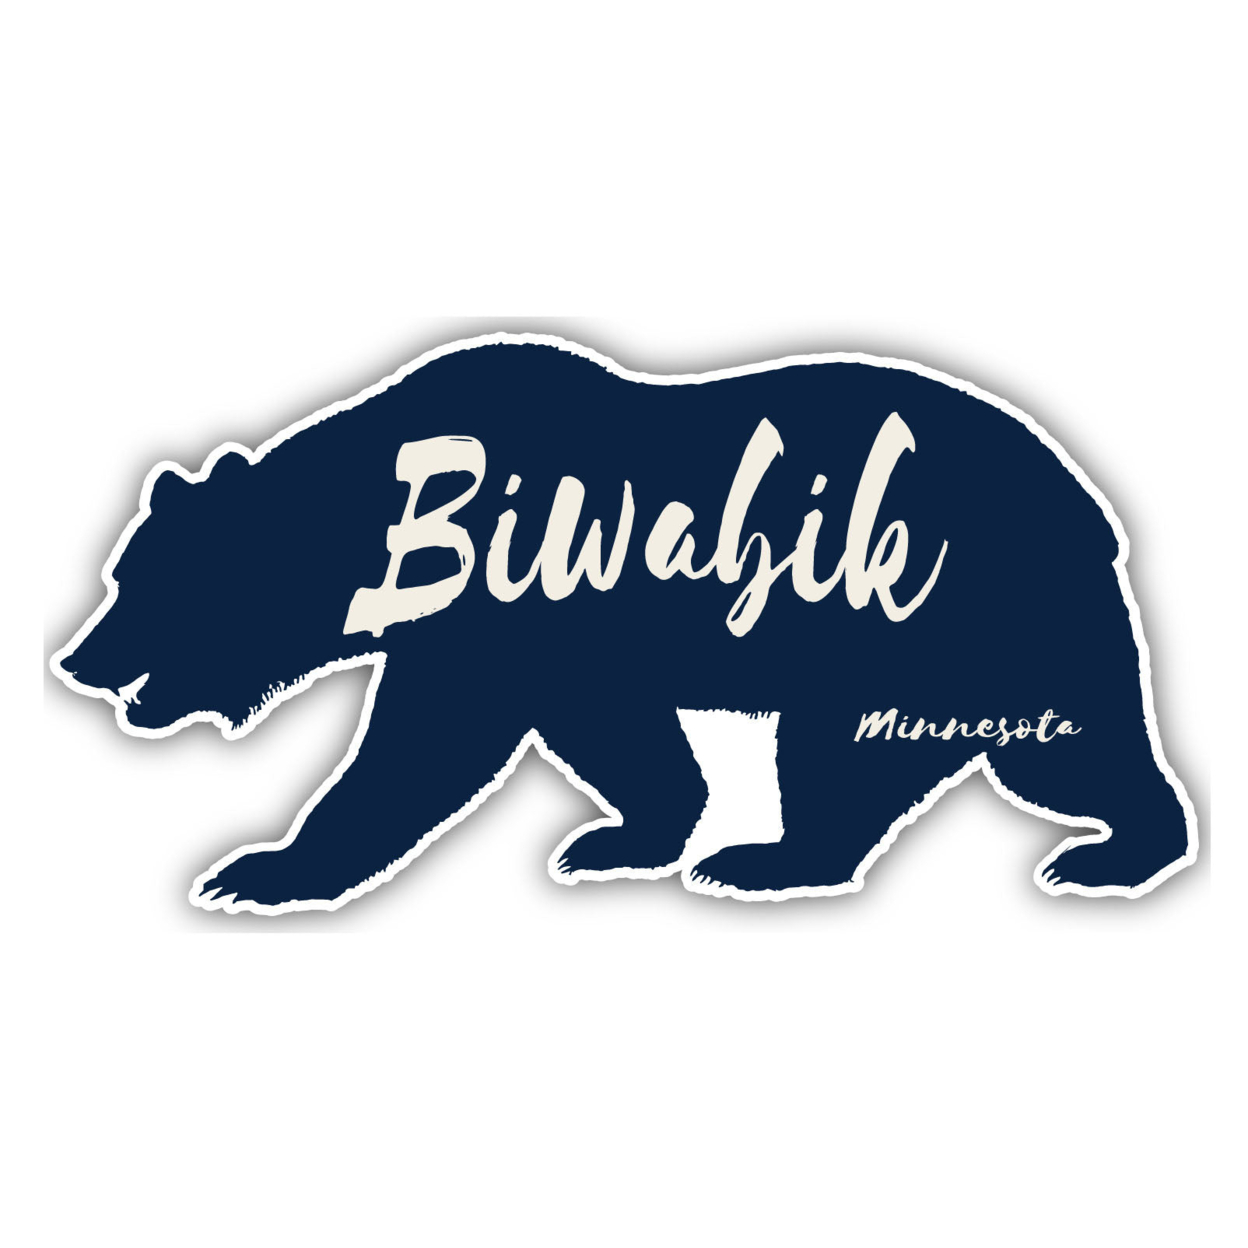 Biwabik Minnesota Souvenir Decorative Stickers (Choose Theme And Size) - 4-Pack, 6-Inch, Bear